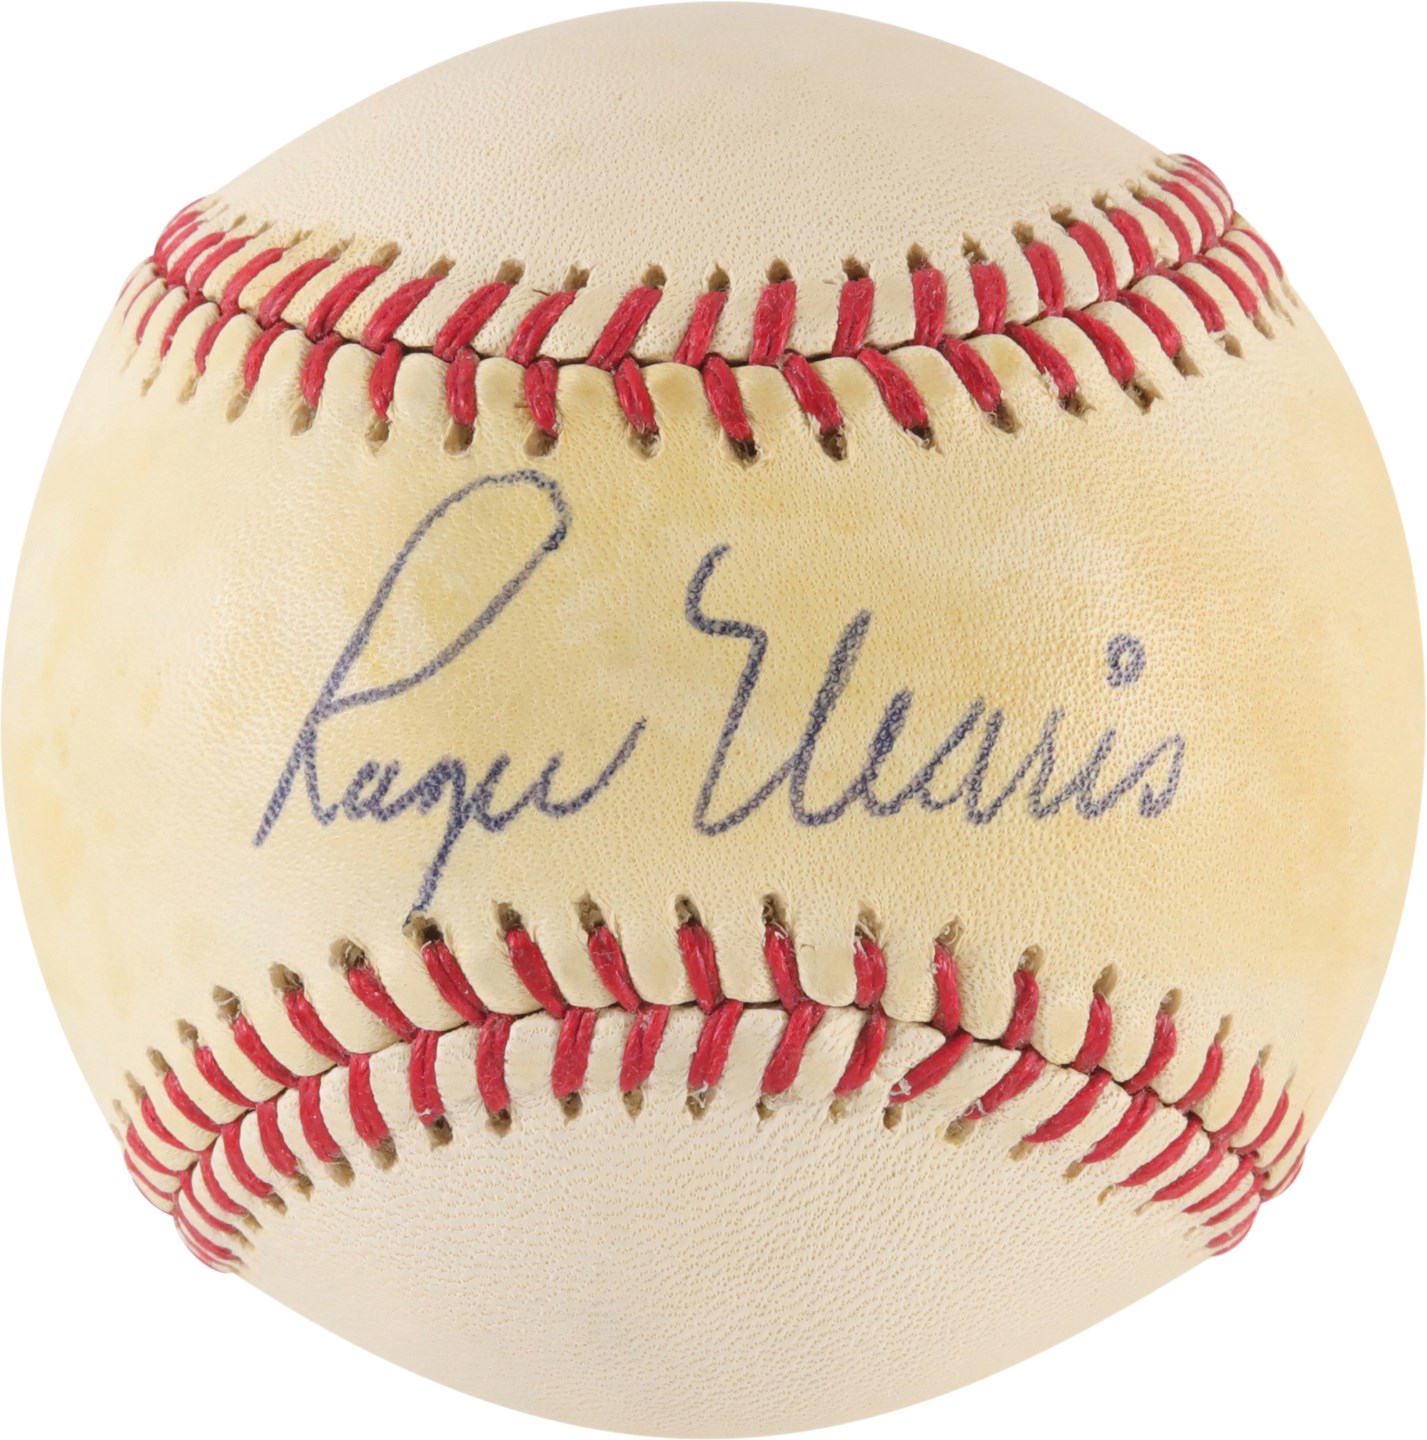 - Roger Maris Single-Signed Baseball (PSA NM-MT 8 Auto)